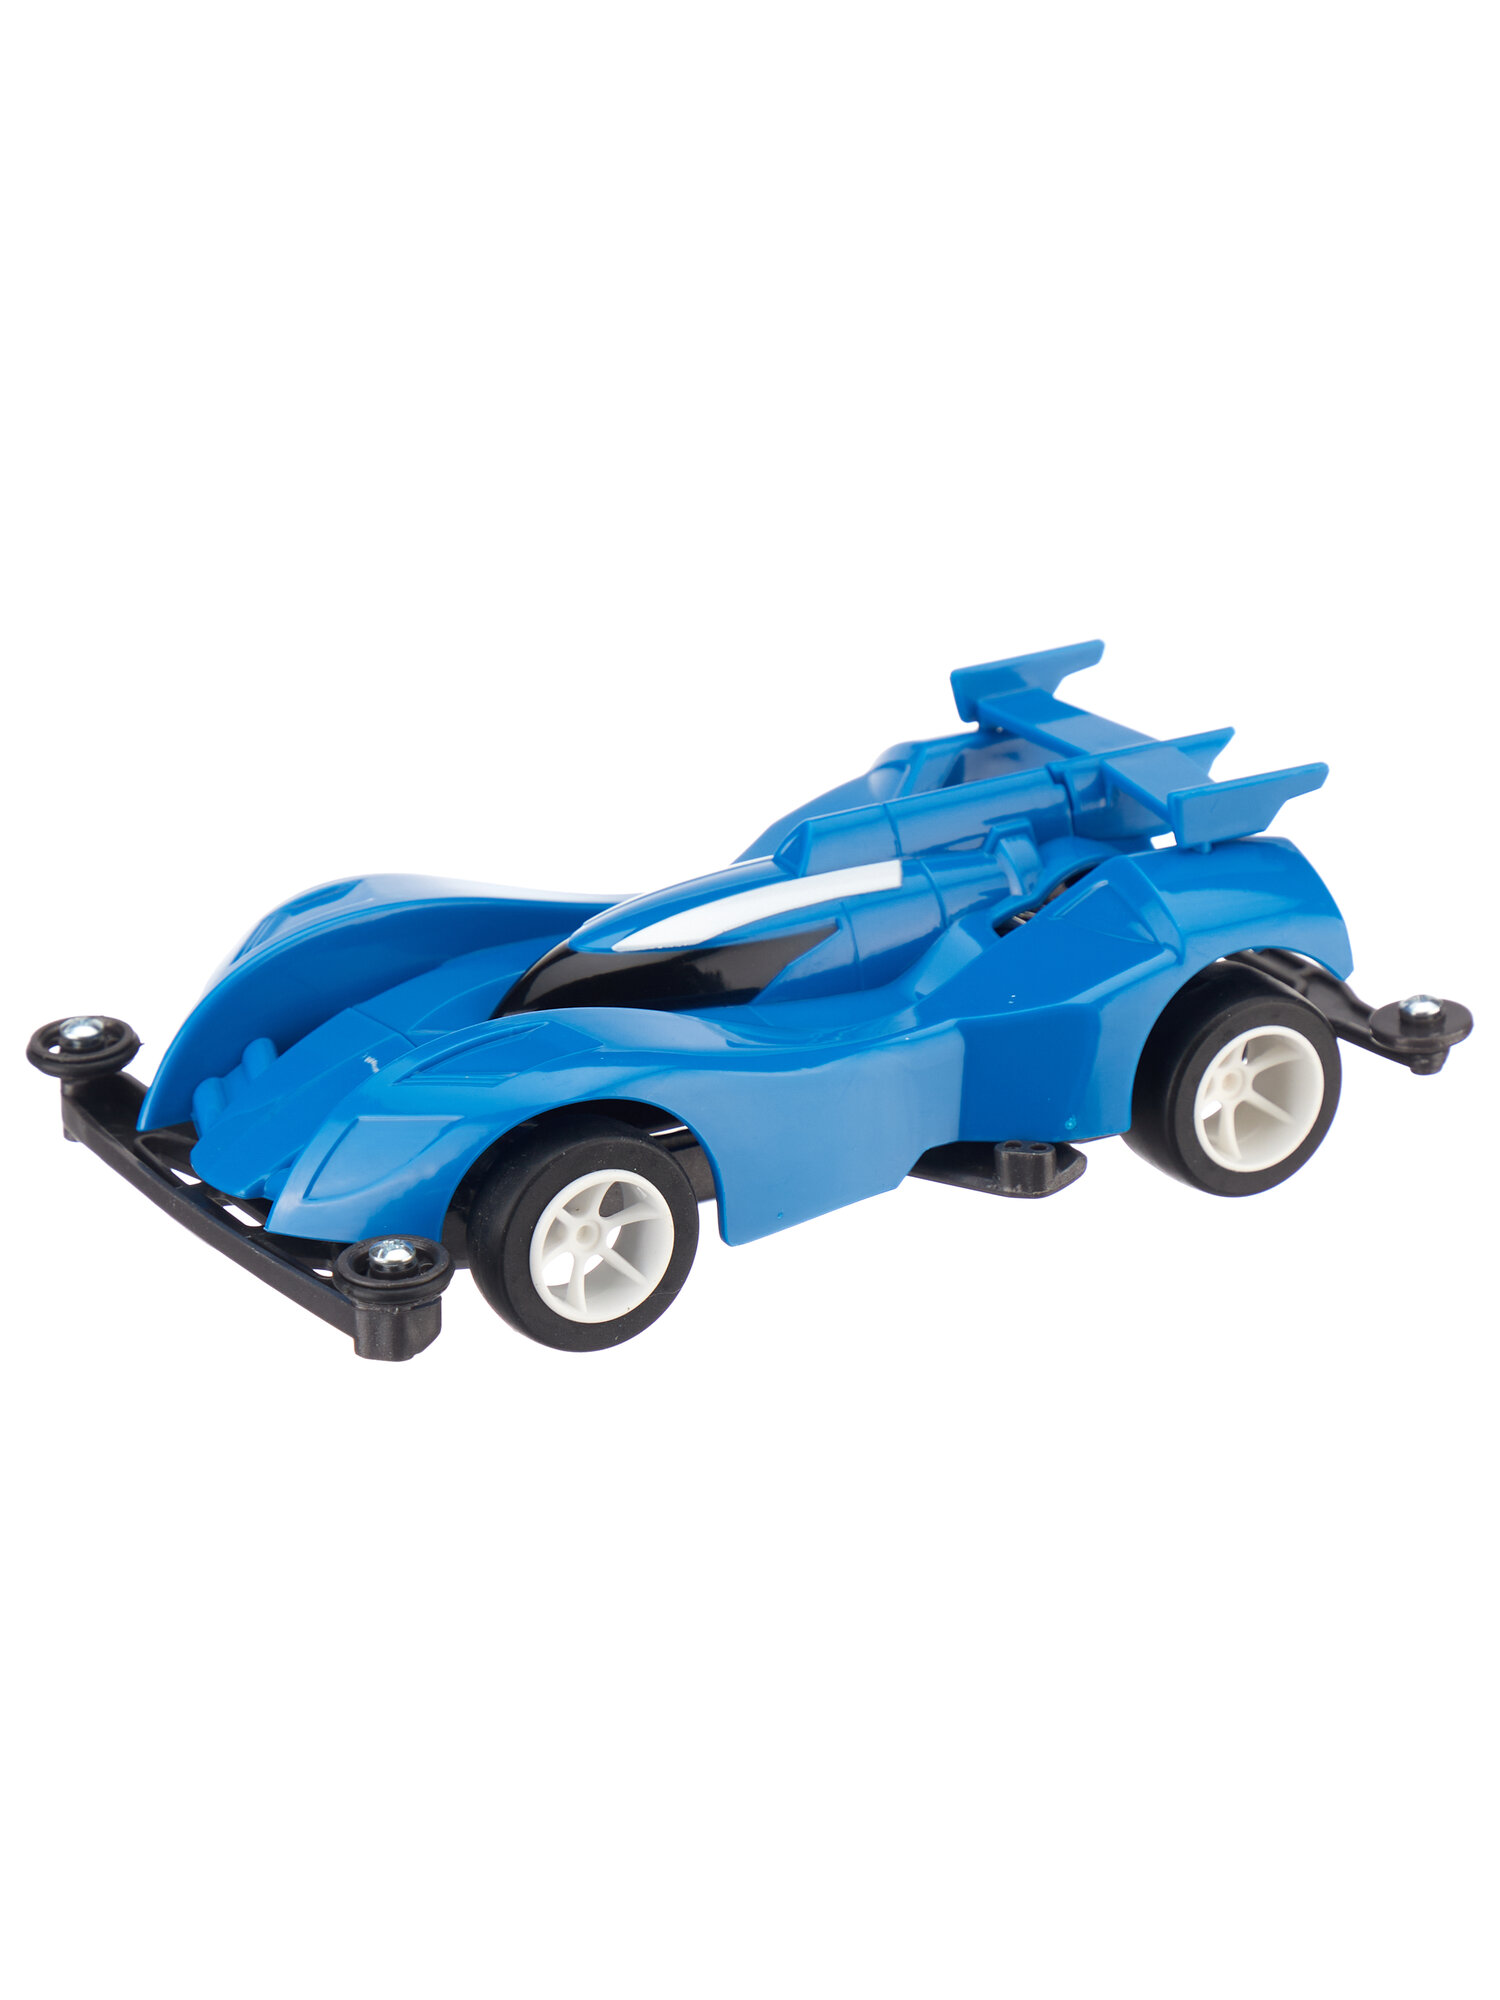 Трансформер YOUNG TOYS Tobot Super Racing Speed 301201, синий